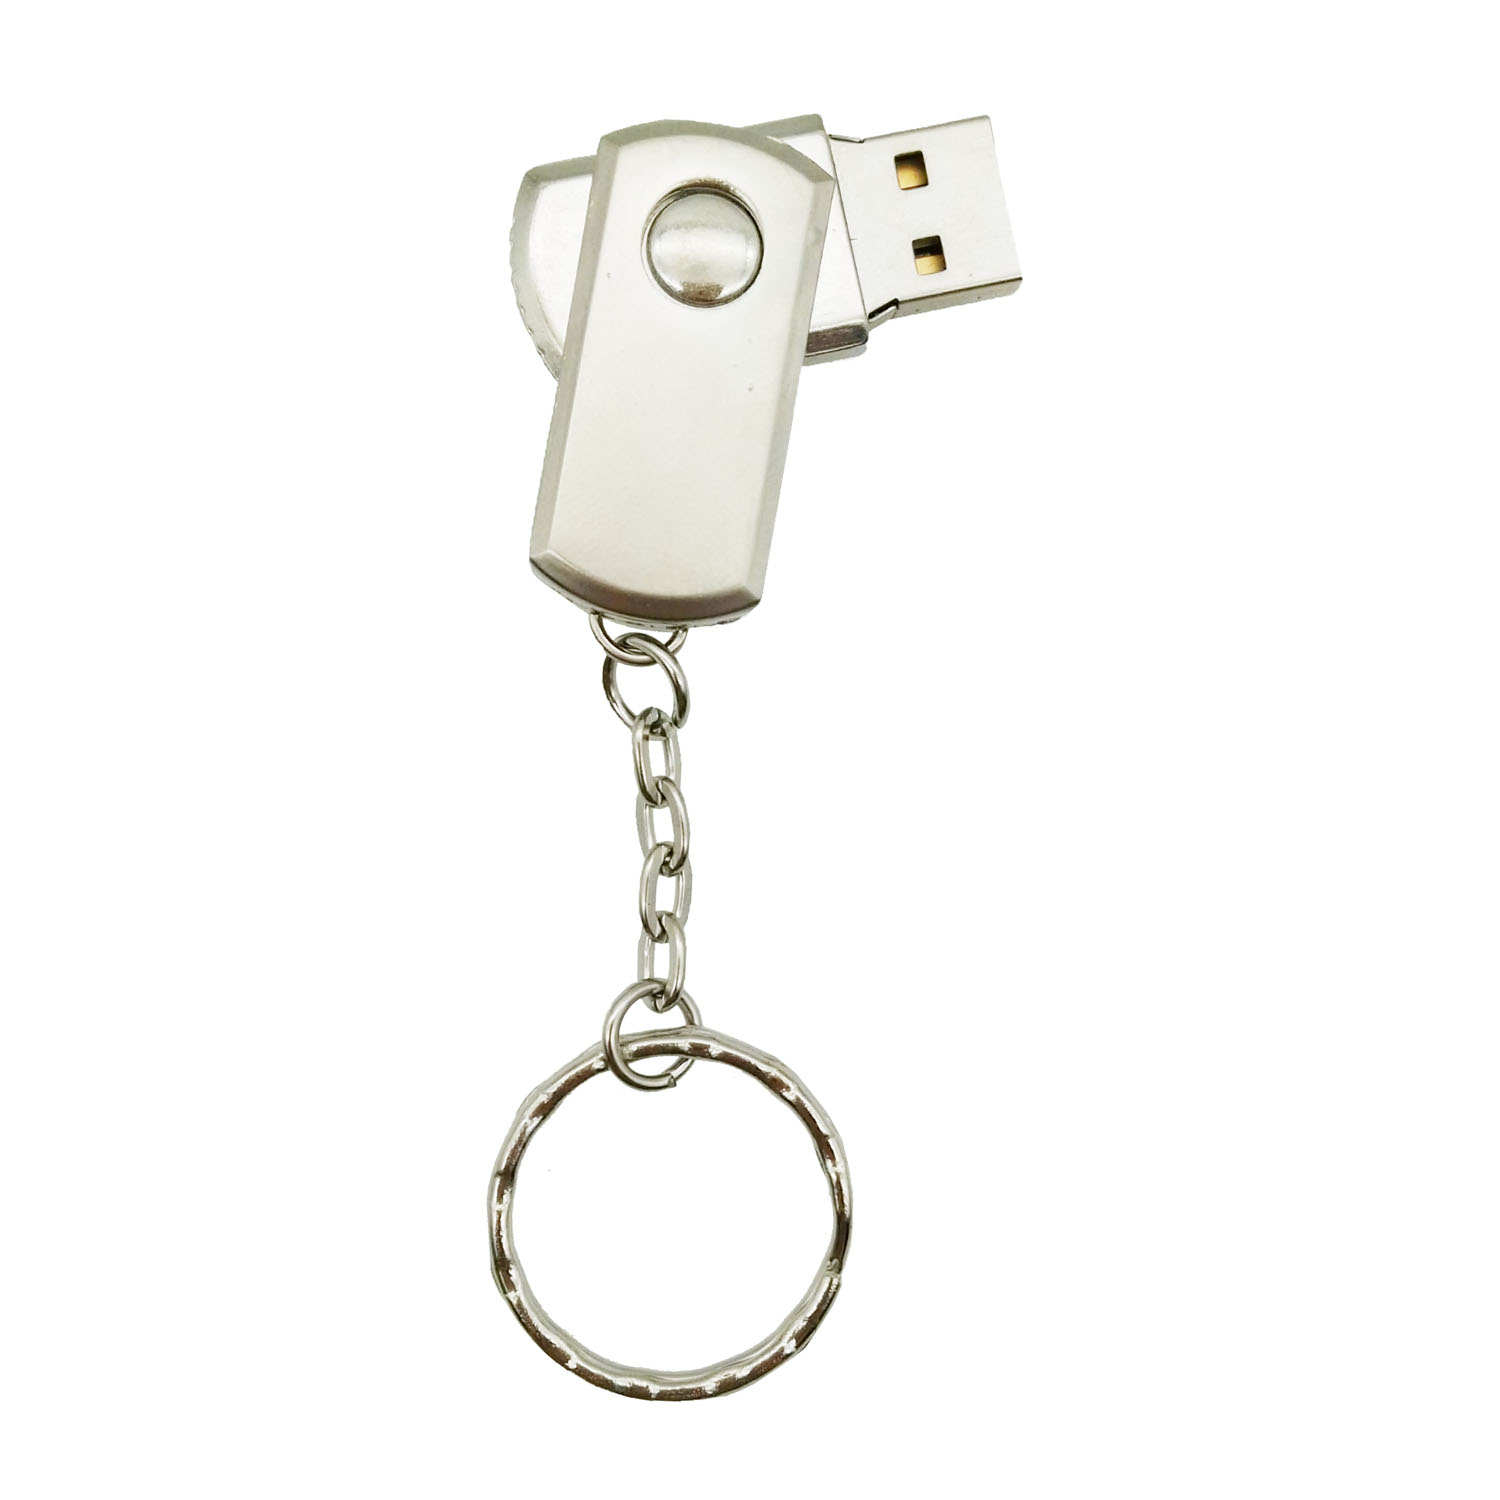 GL-AAA1170 Metal Body 1 GB USB Flash Drive with Key Chain